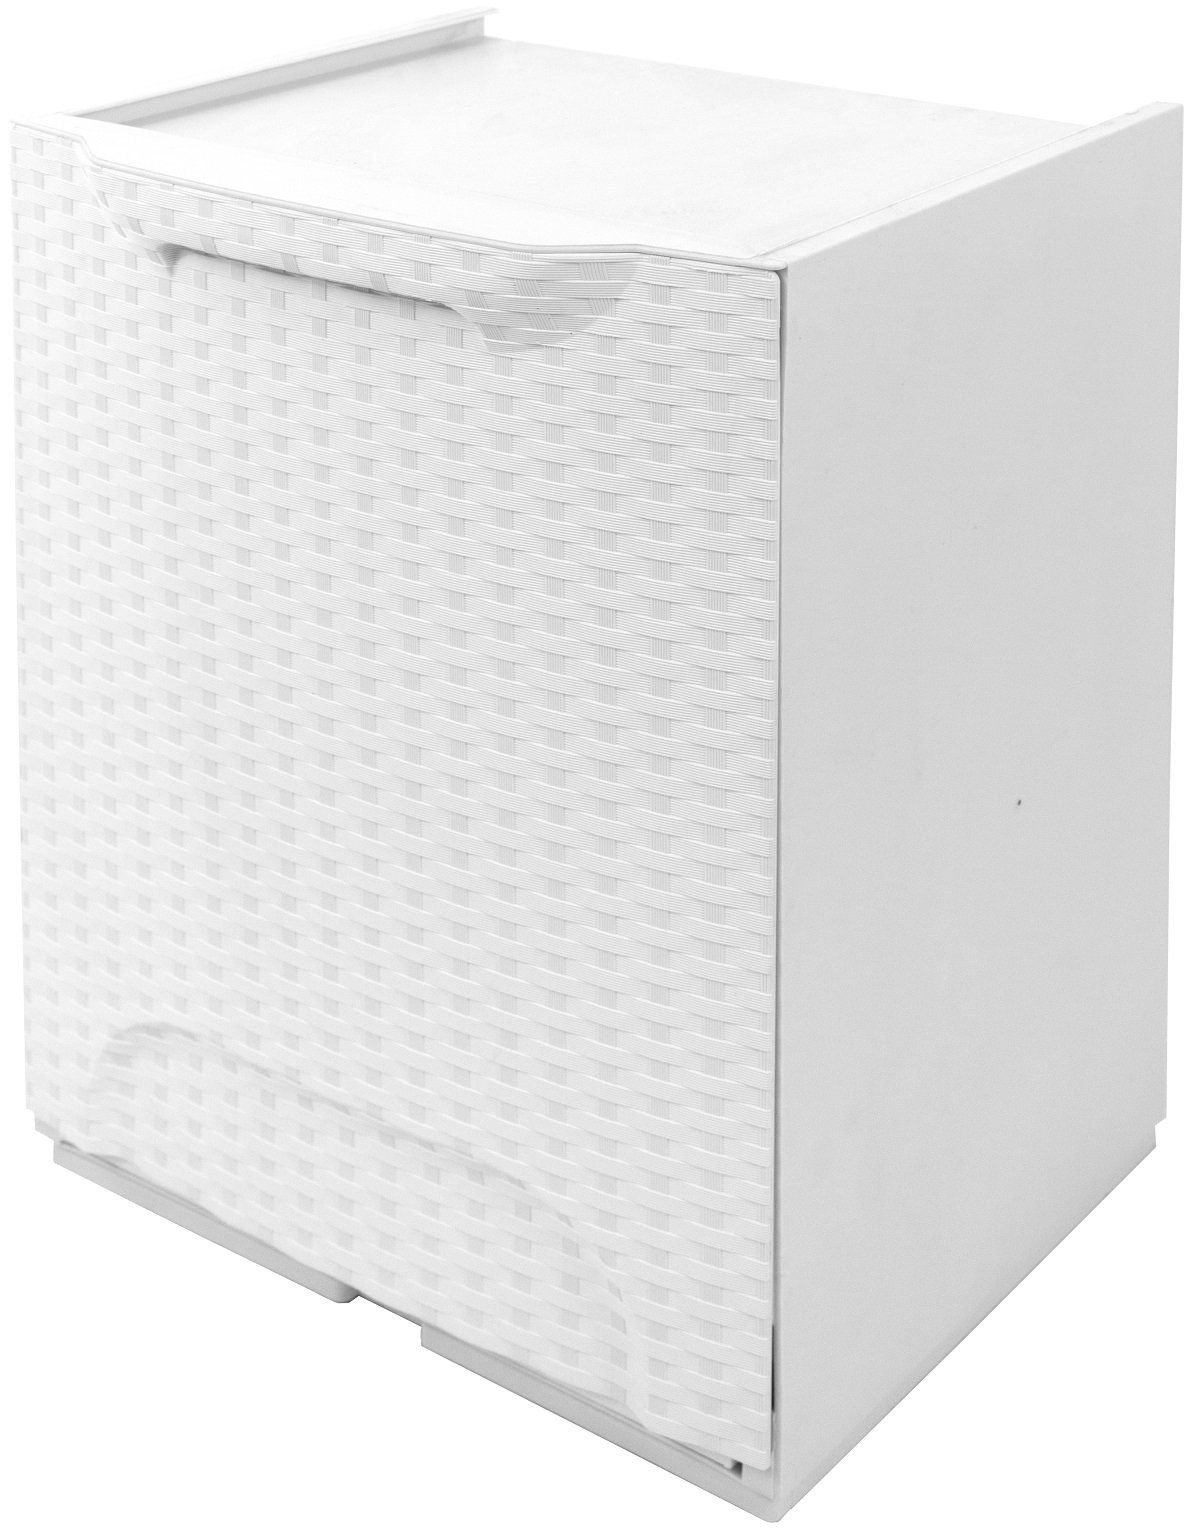 Úložný box / kôš výklopný RATTAN biely 34x29x47 cm